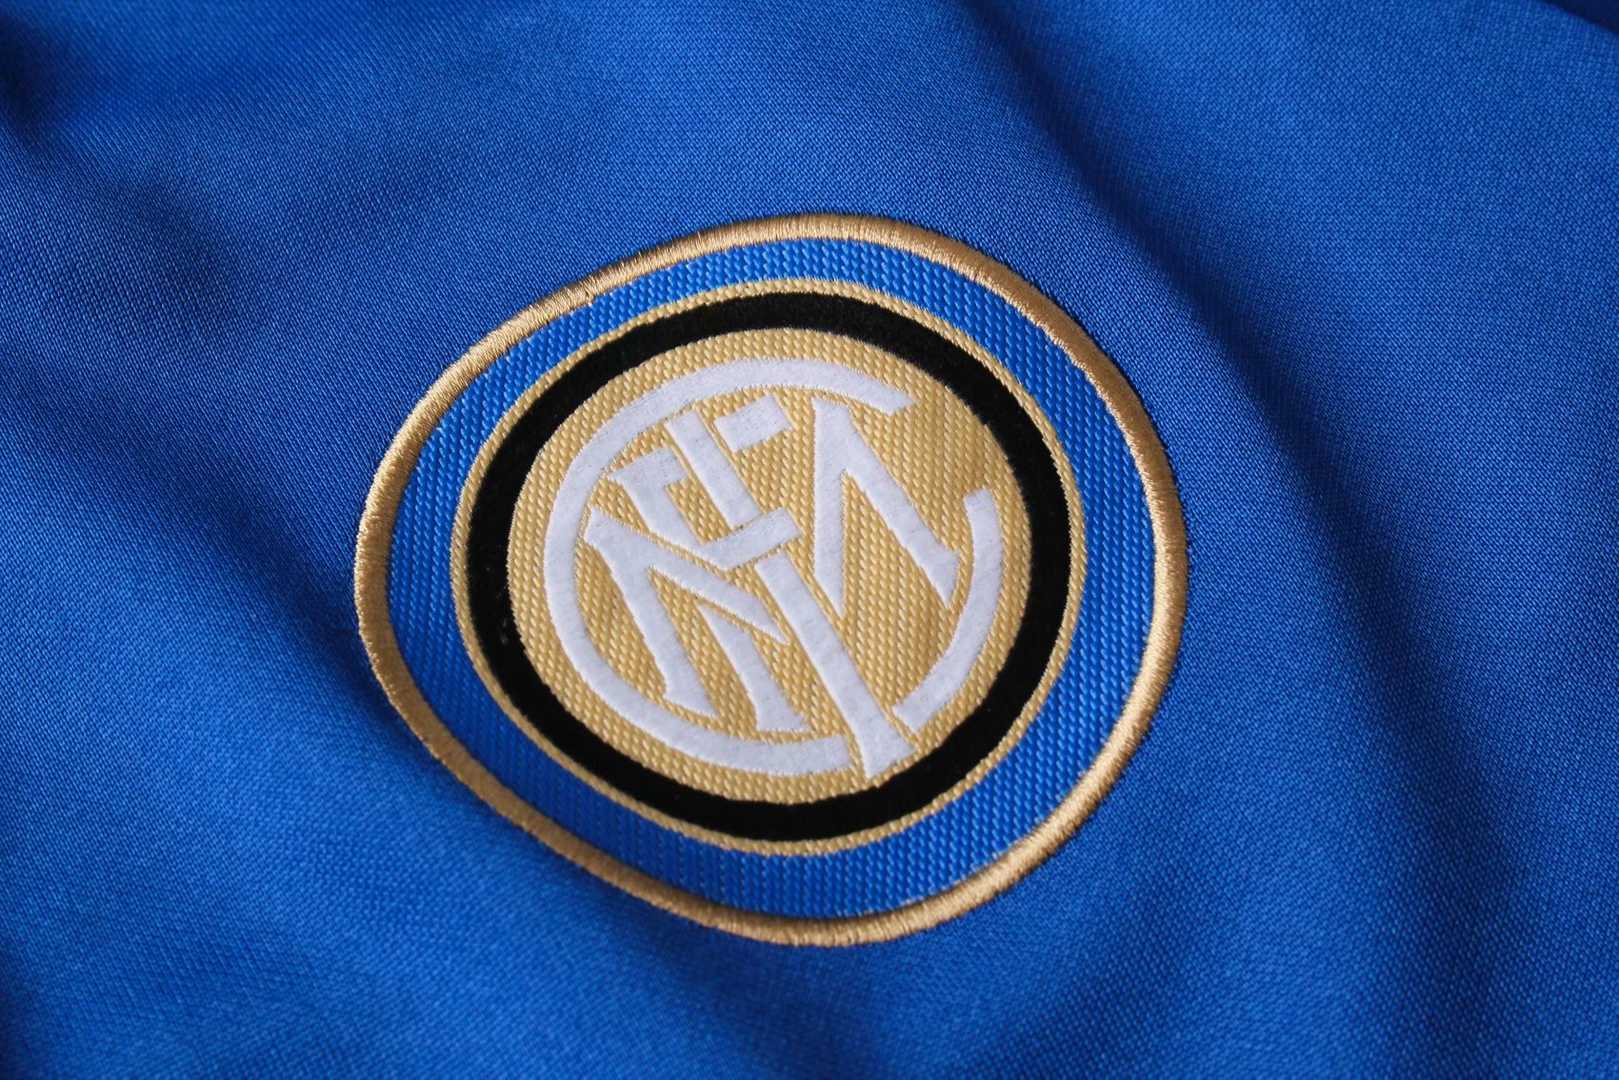 2019/20 Inter Milan High Neck Blue Mens Soccer Training Suit(Jacket + Pants)